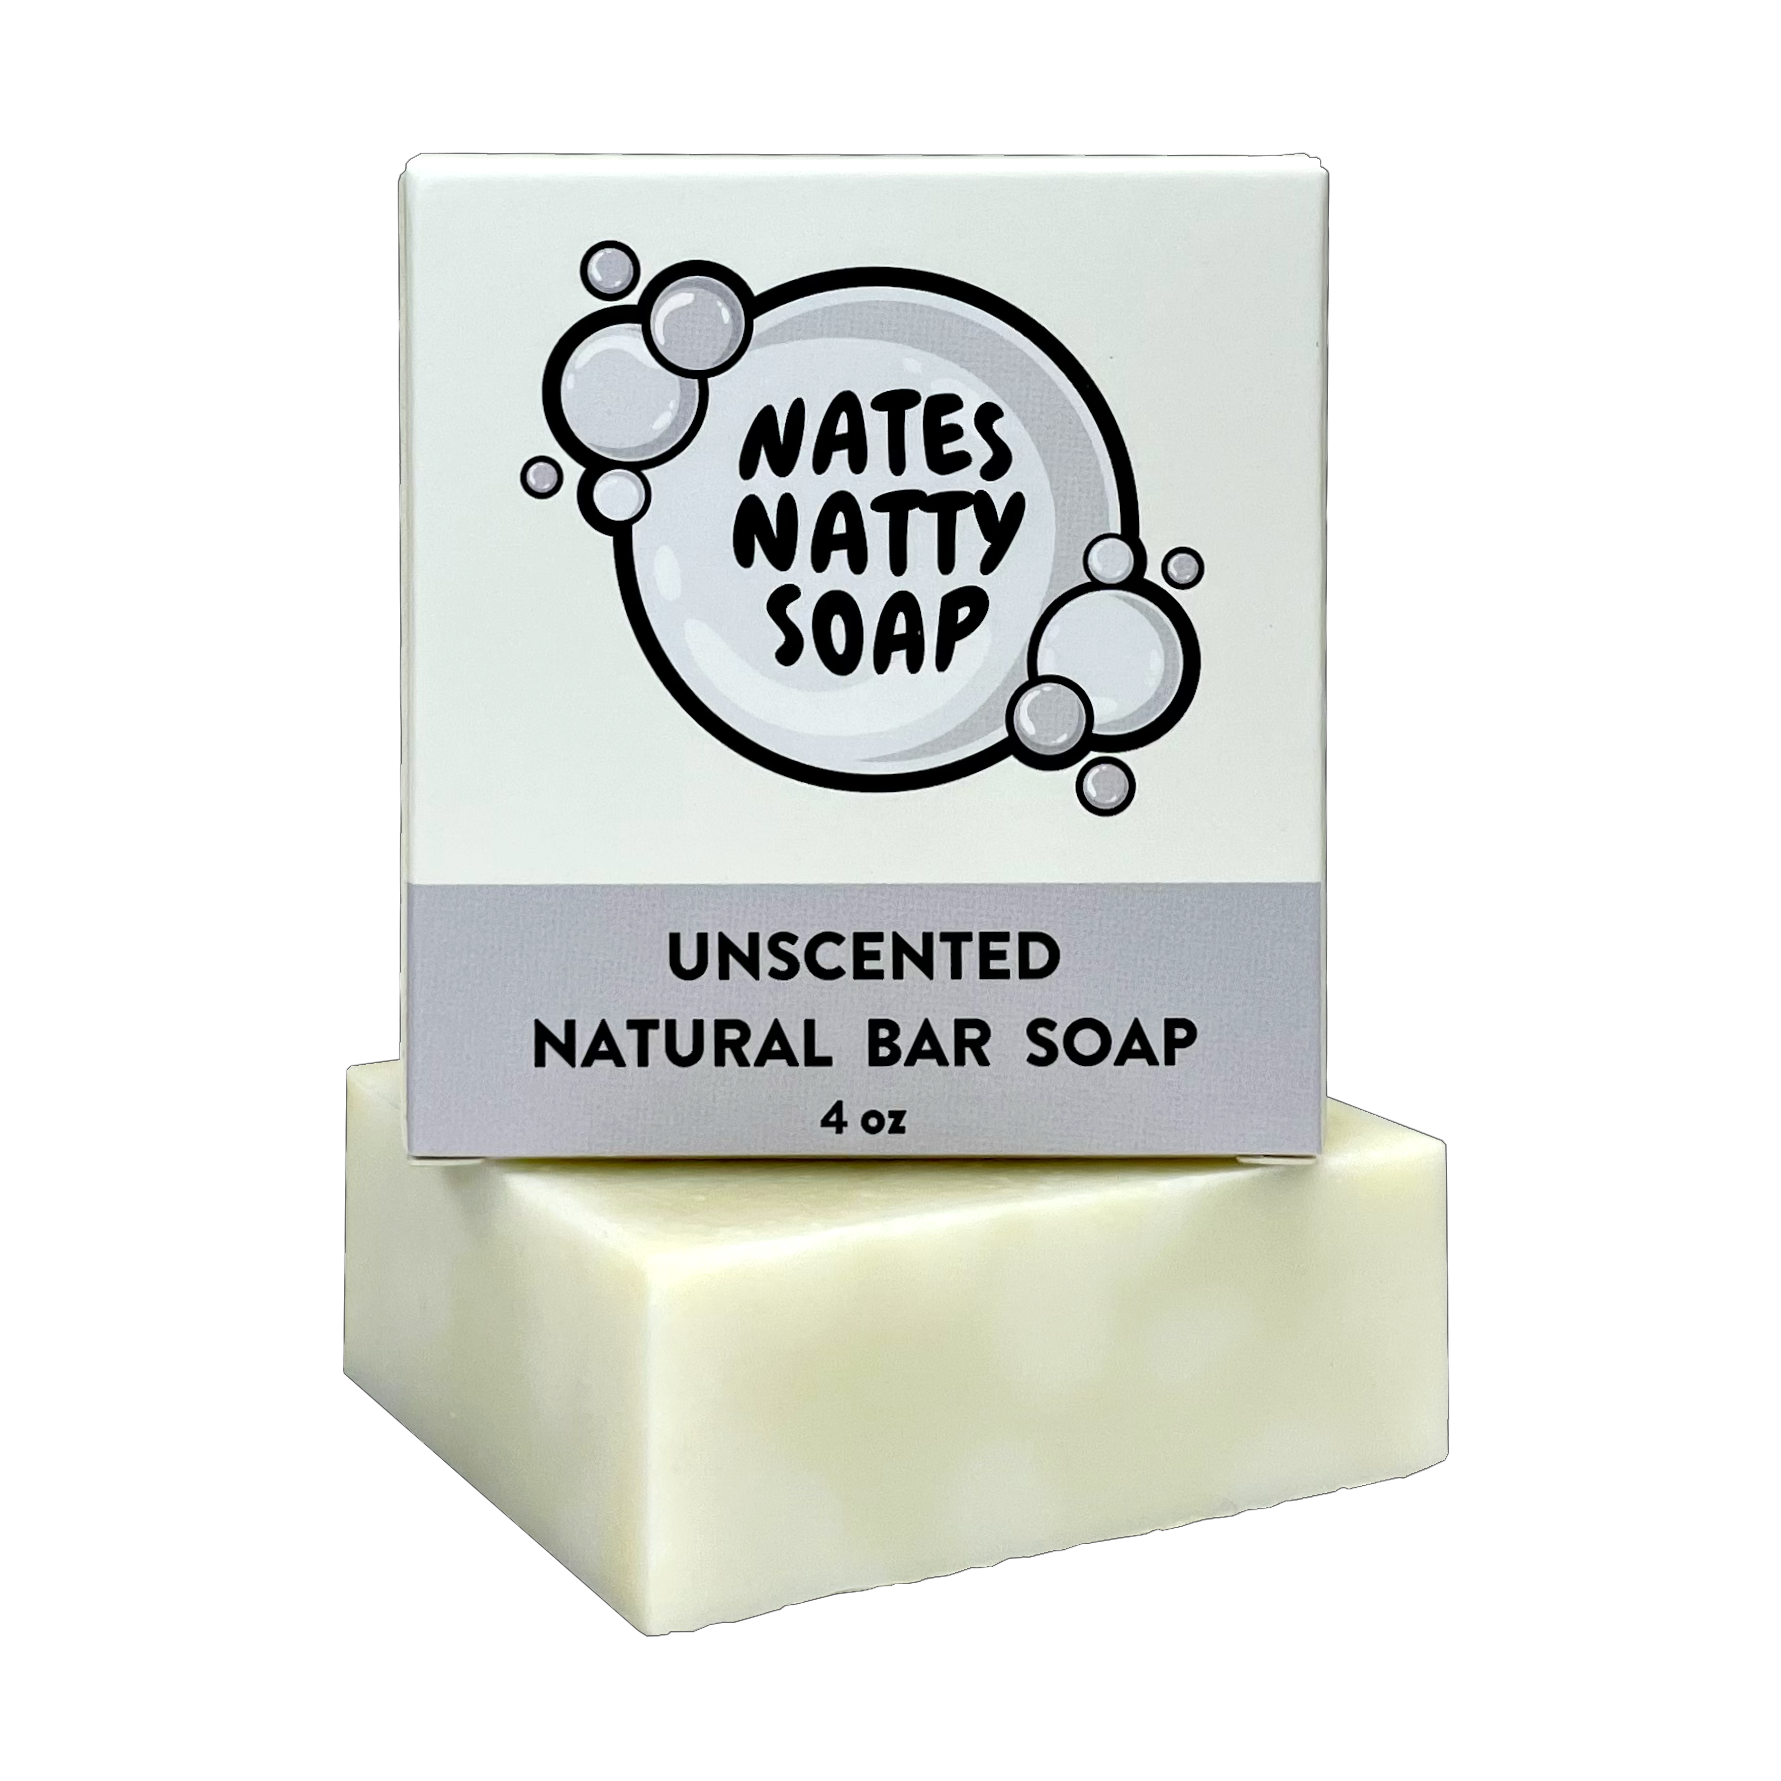 Unscented Bar Soap